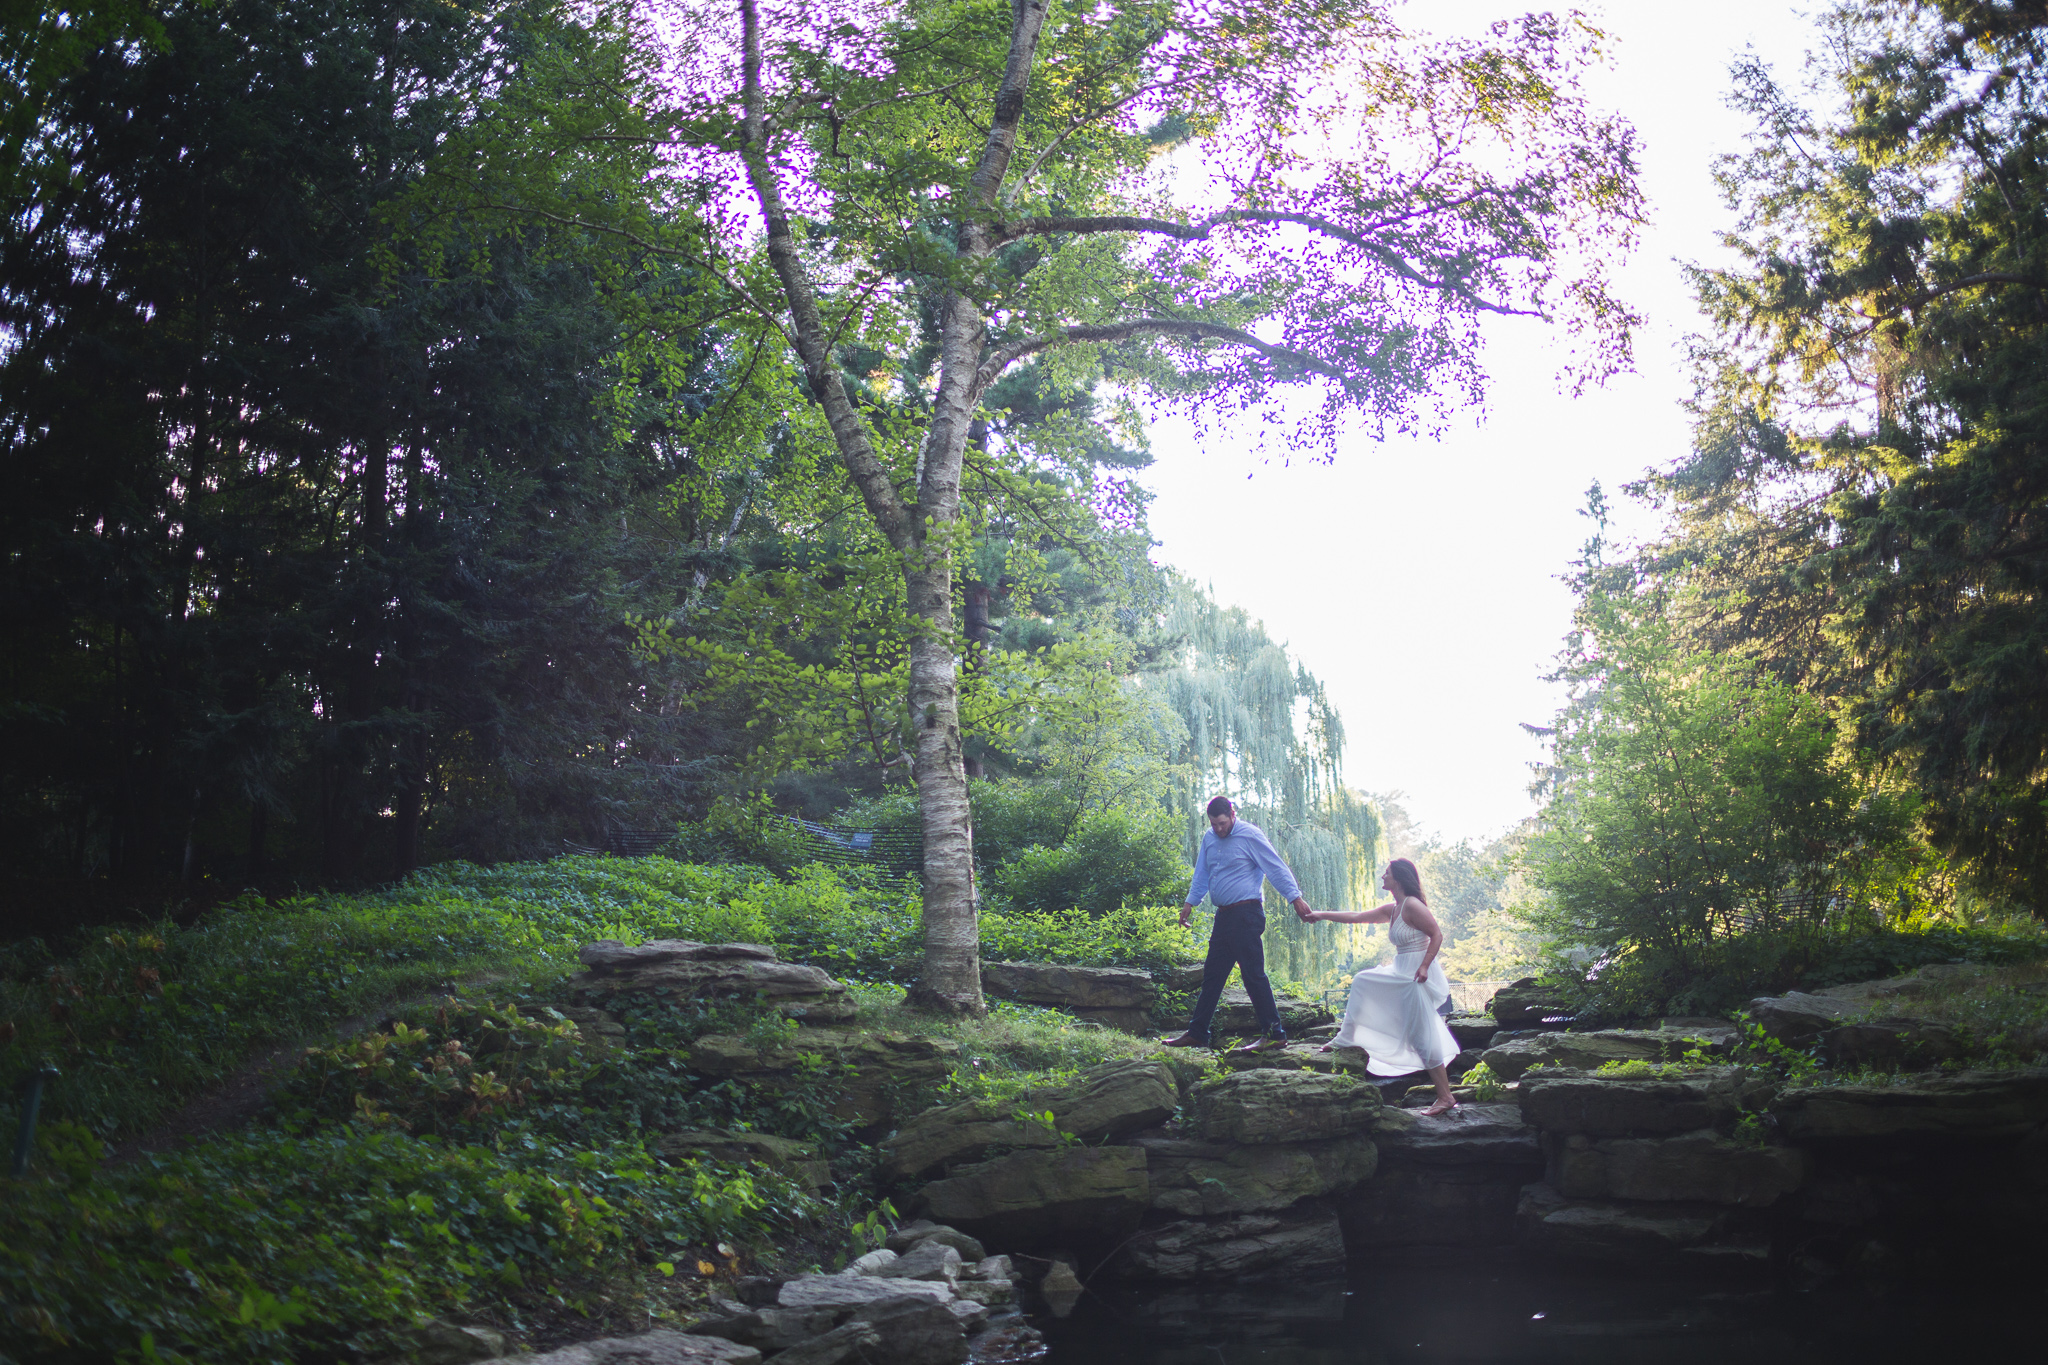 009-wedding-photographer-detroit-michigan-outdoor-natural-engagement-photography.jpg